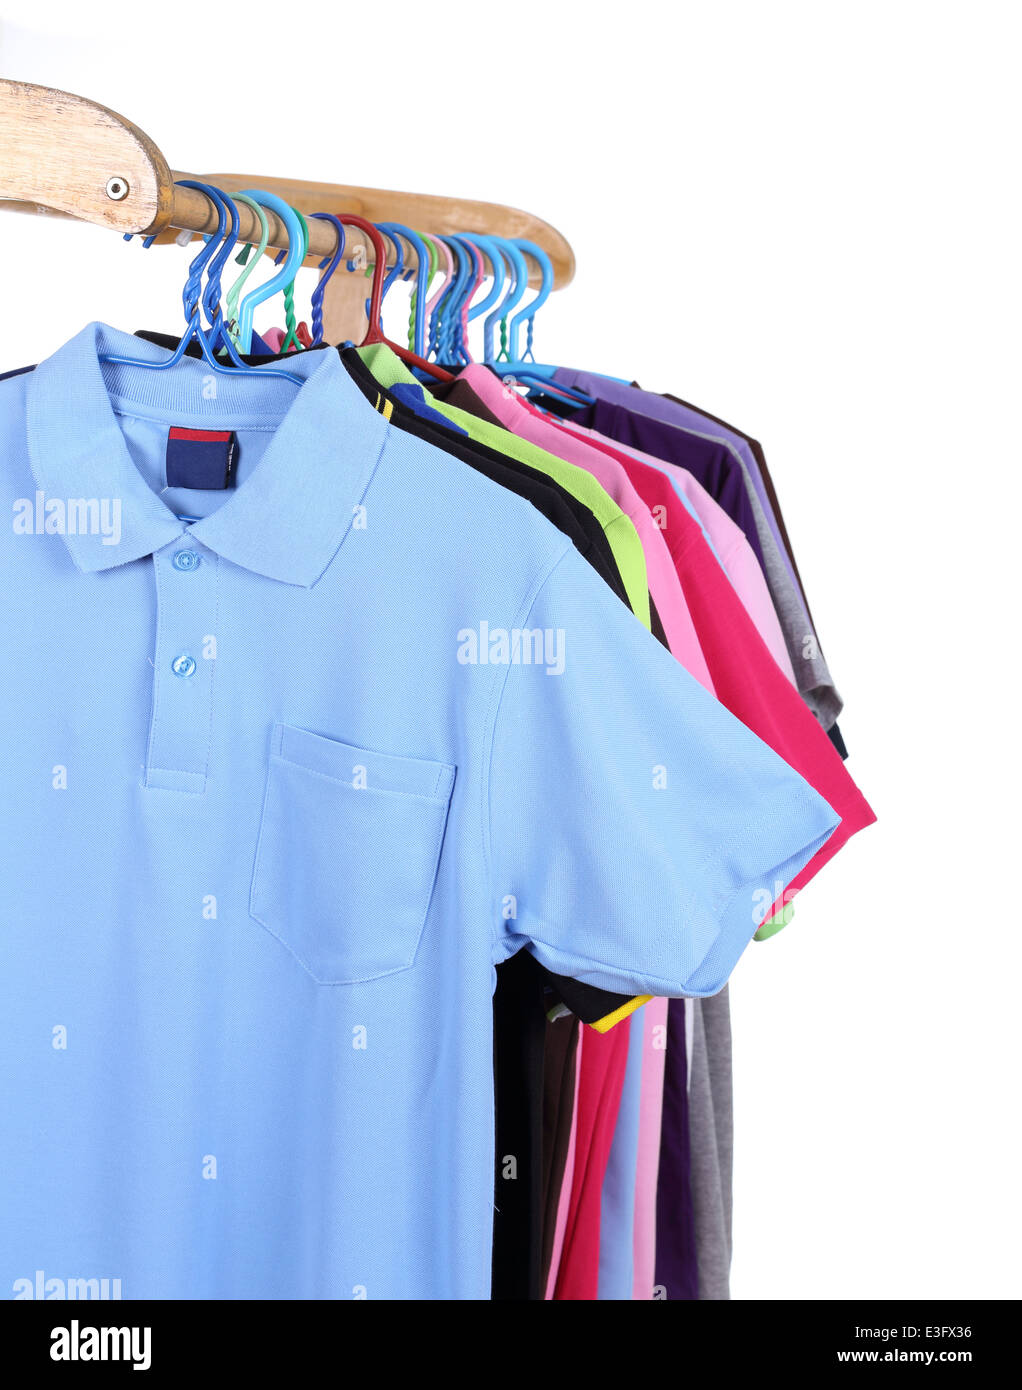 Hanging Polo shirt isolted on white background Stock Photo